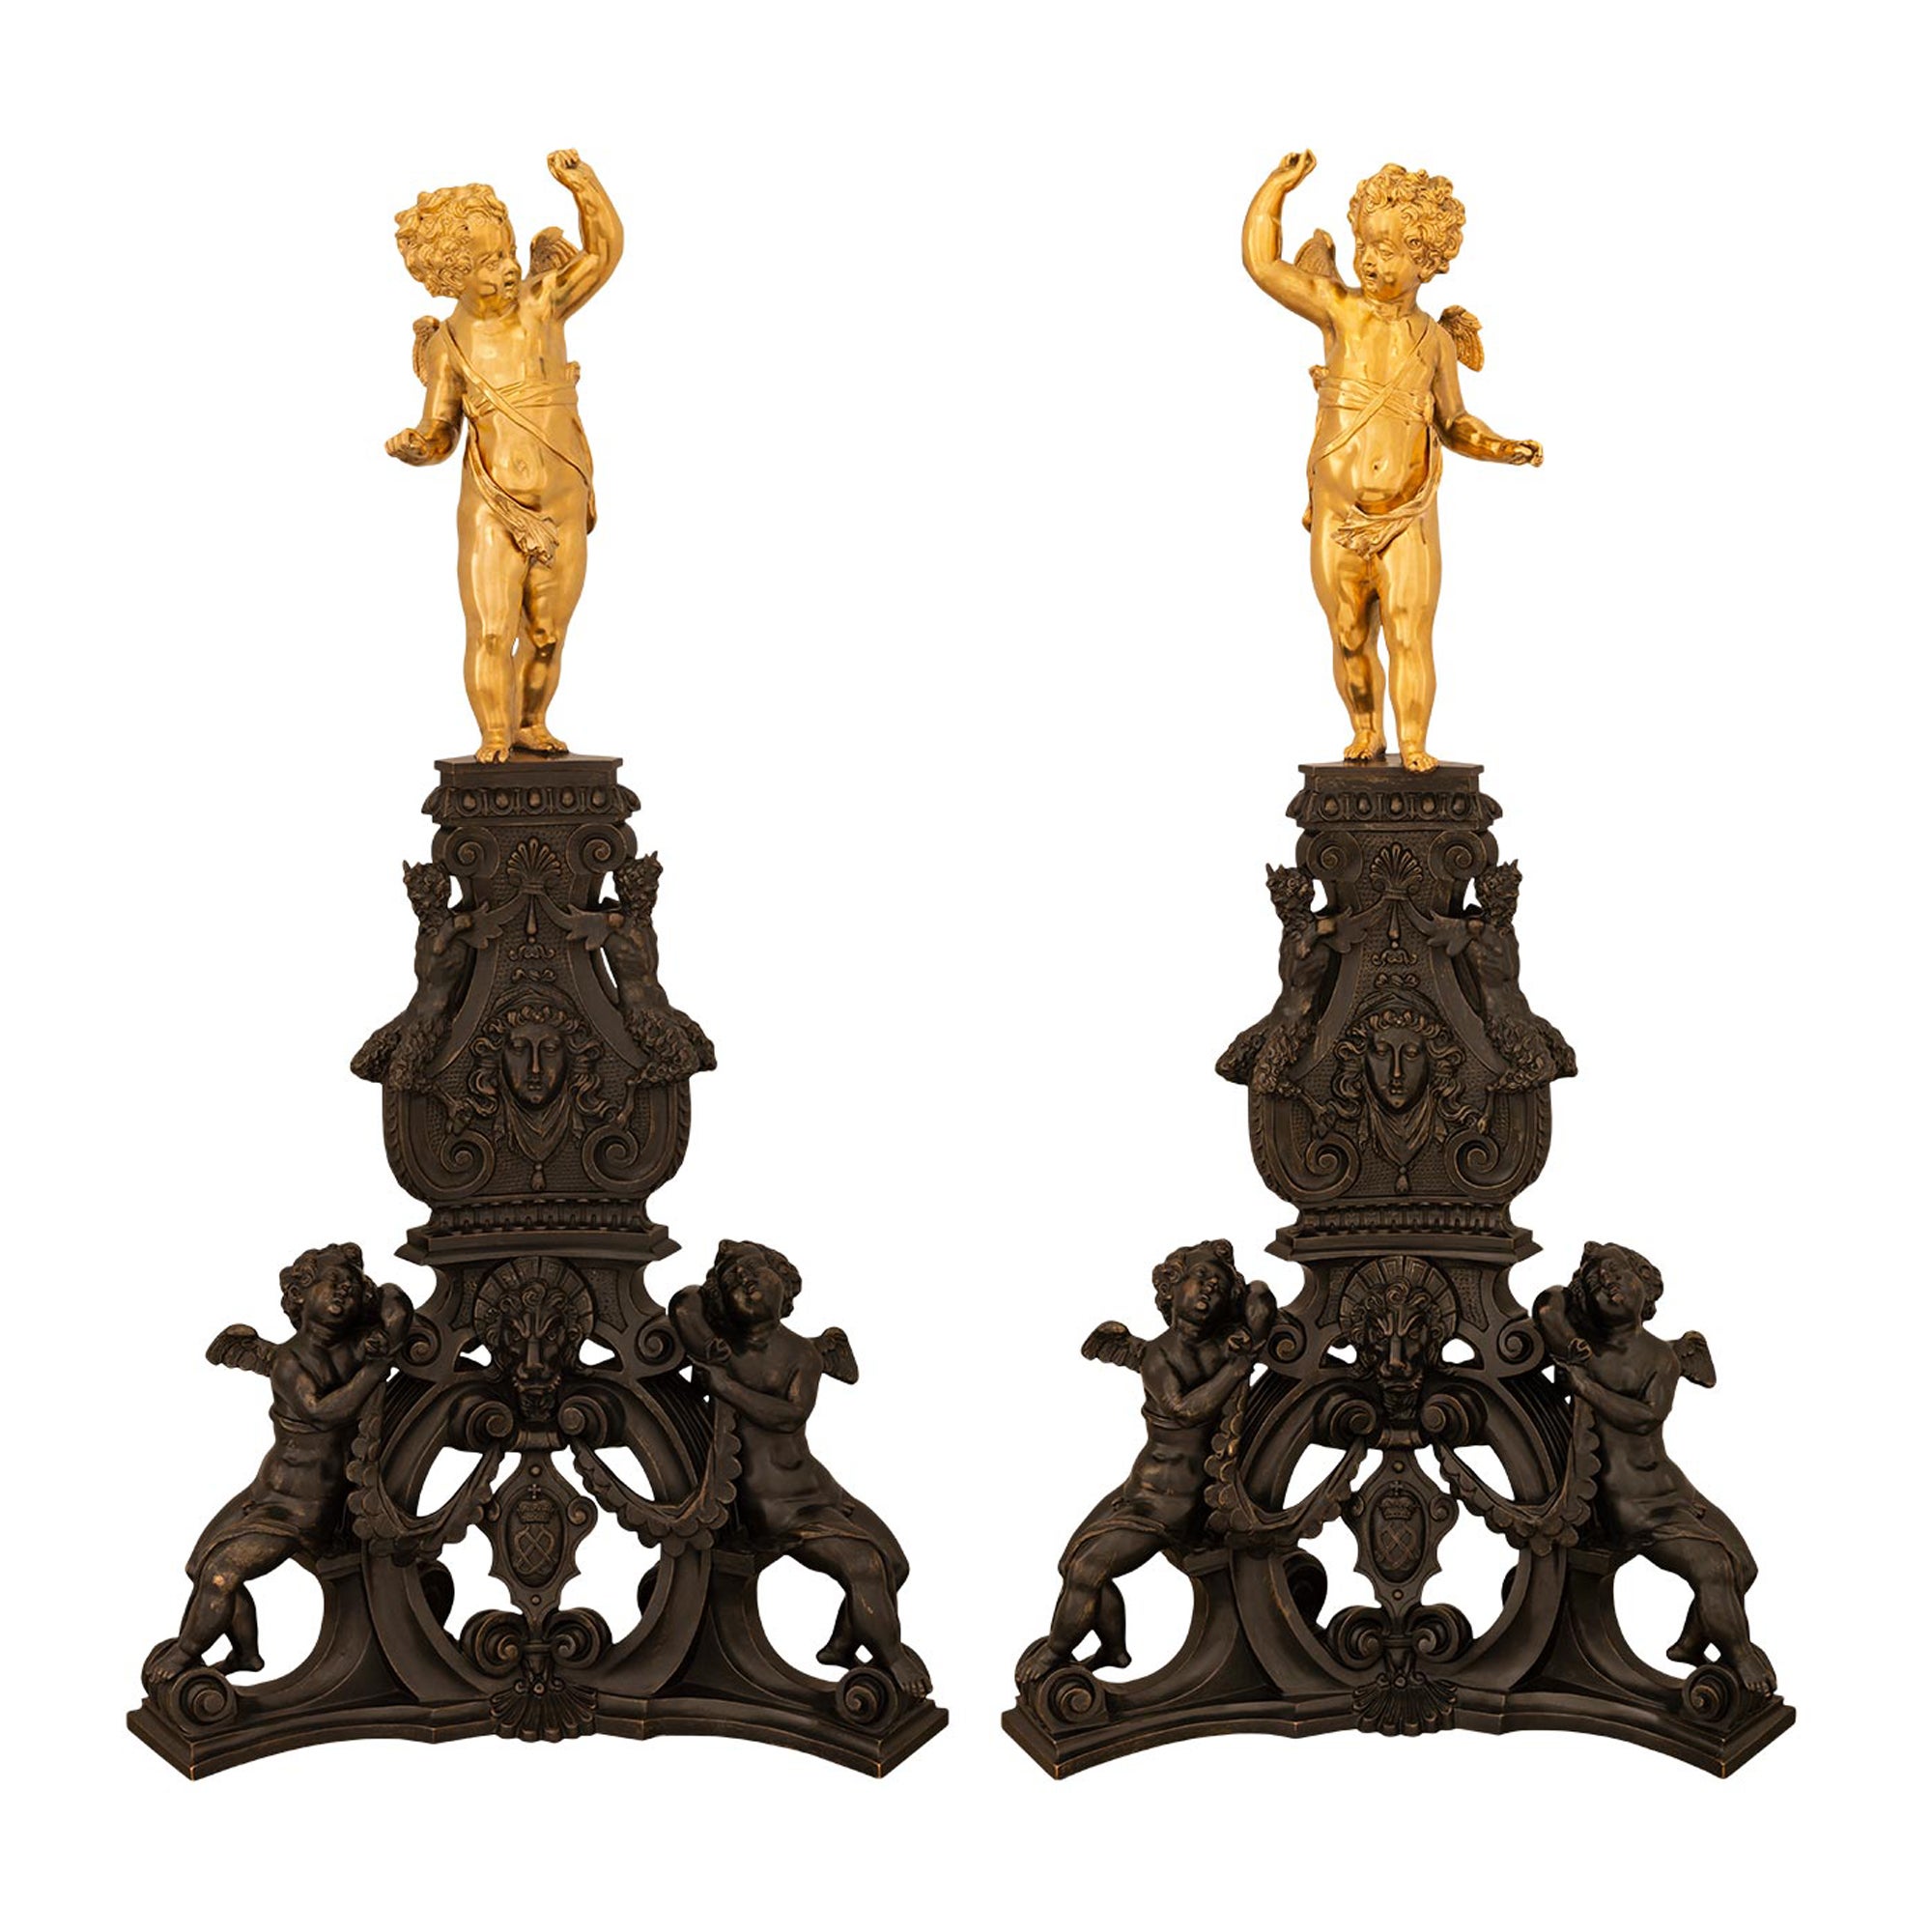 True Pair Of French 19th Century Napoleon III Period Ormolu & Bronze Andirons For Sale